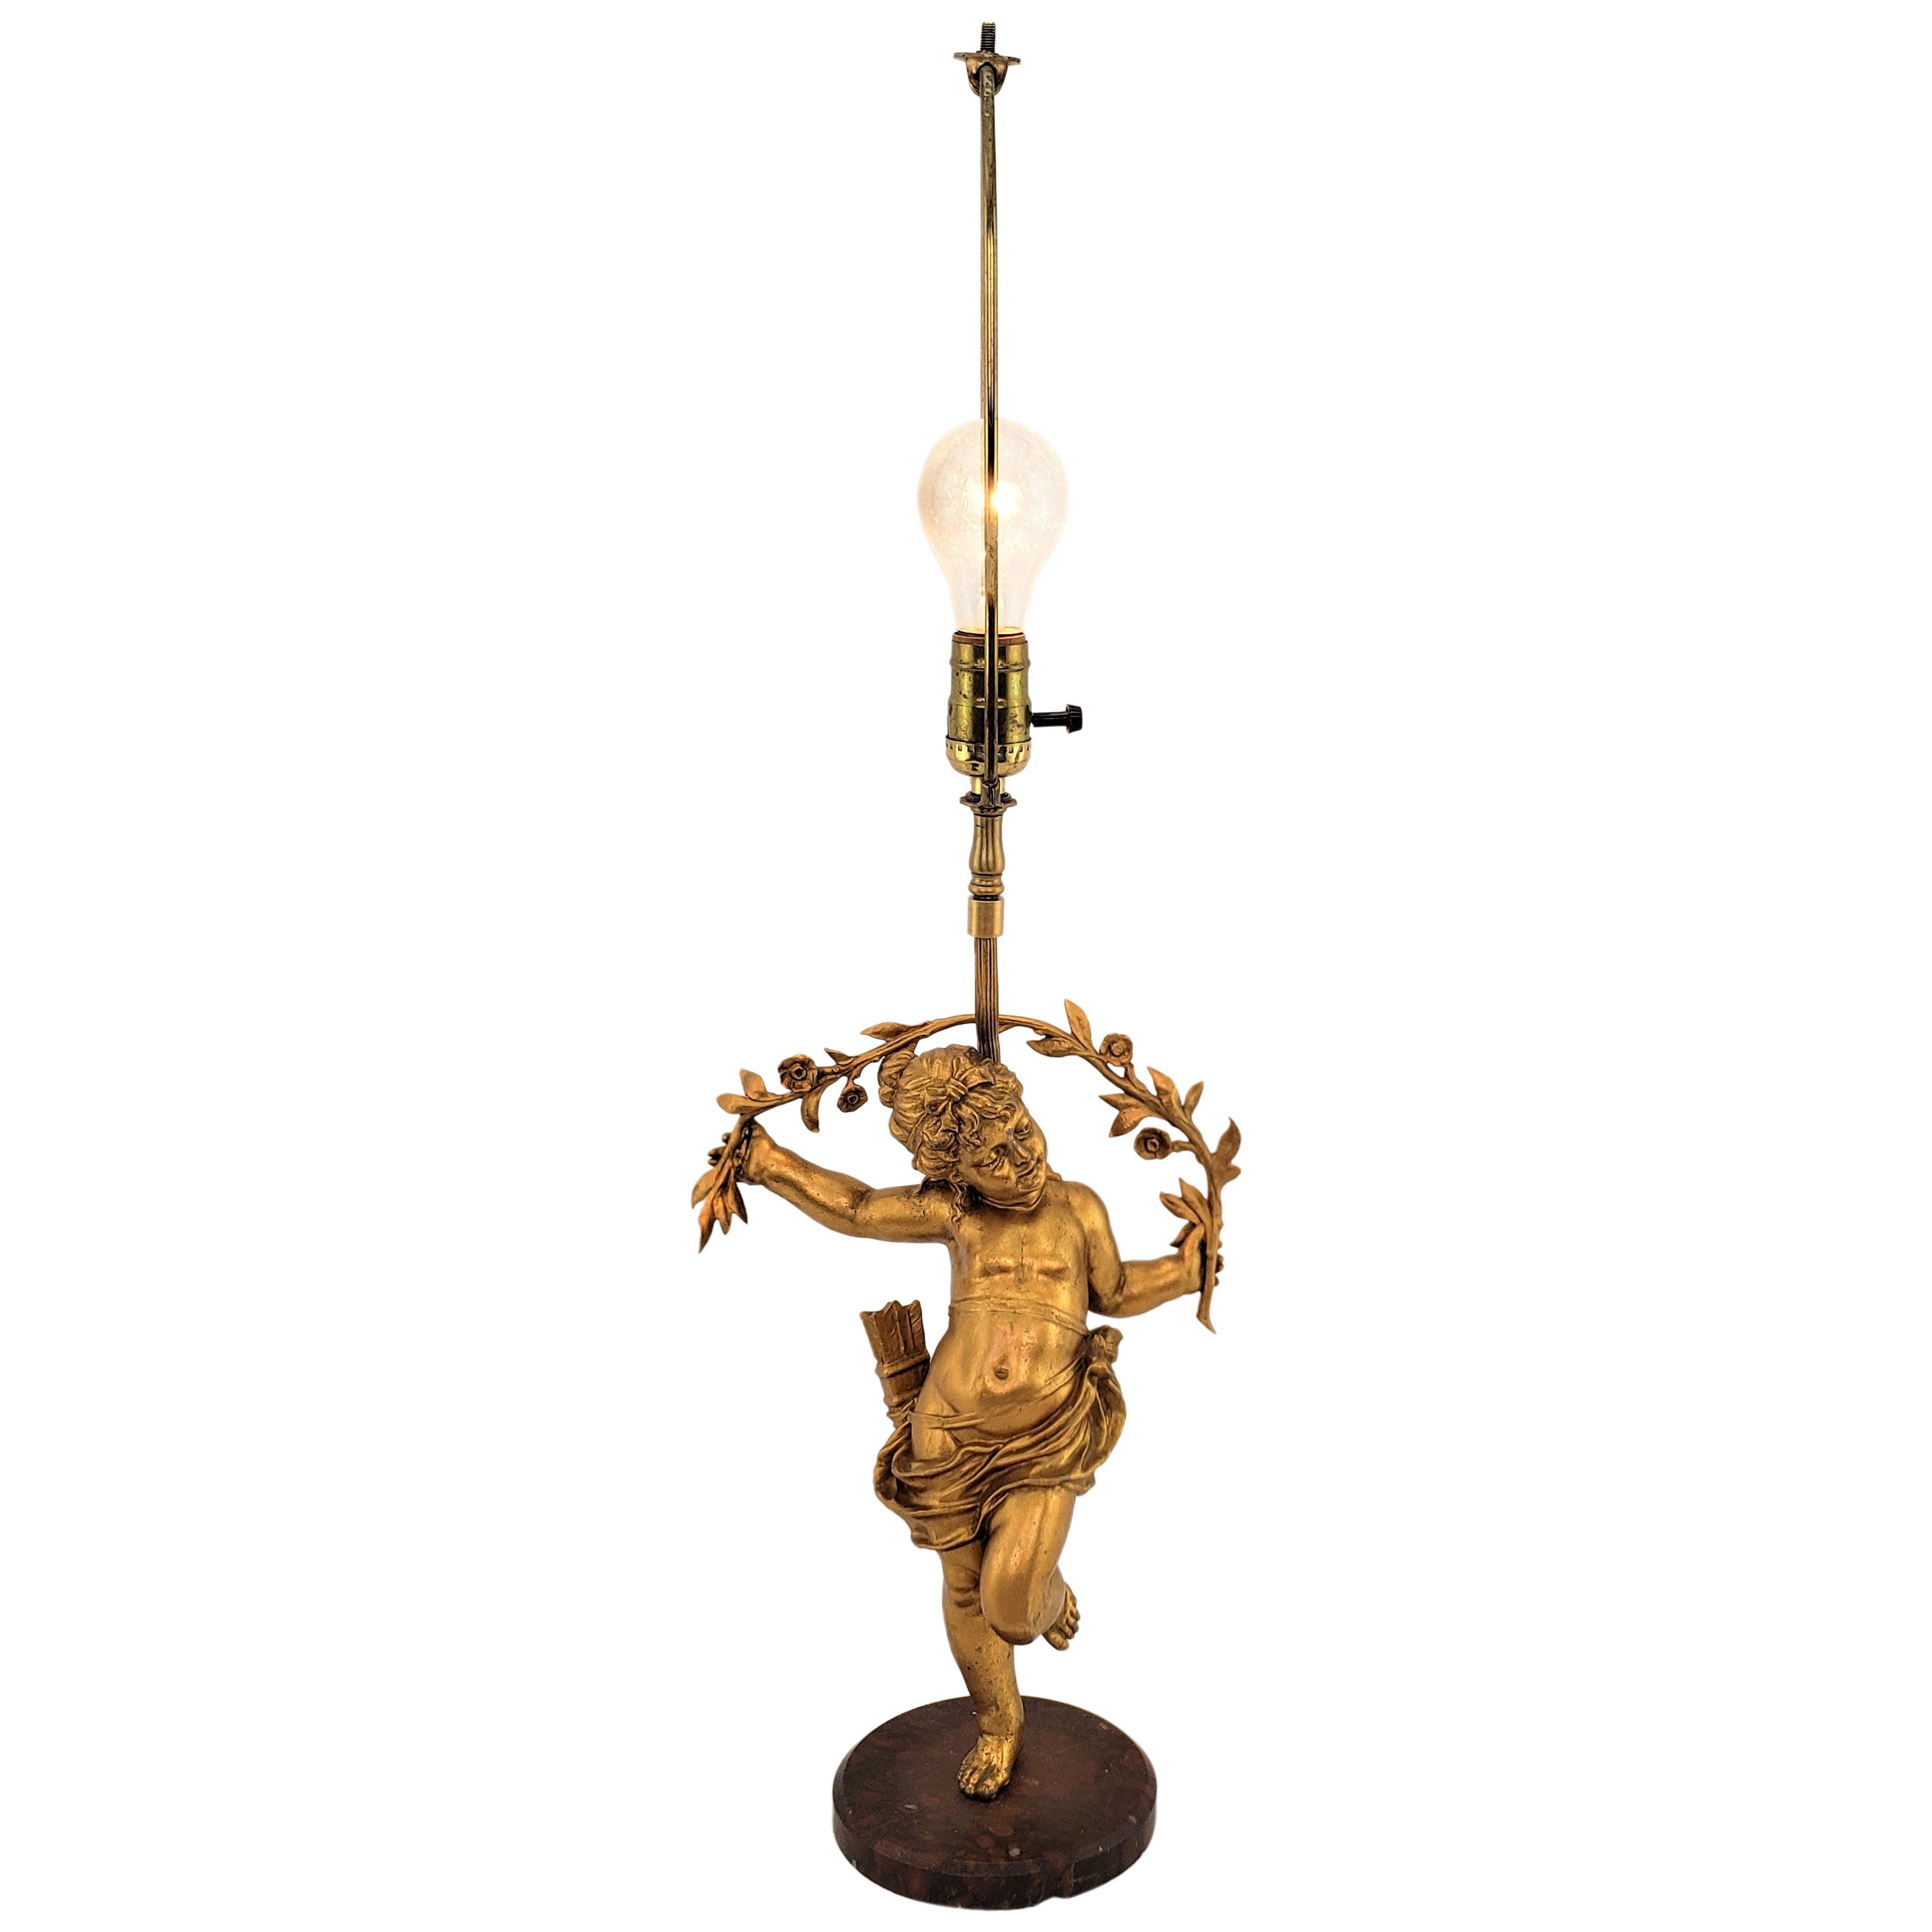 Antique Ornately Cast & Gilt Finished Sculptural Cherub Table Lamp For Sale